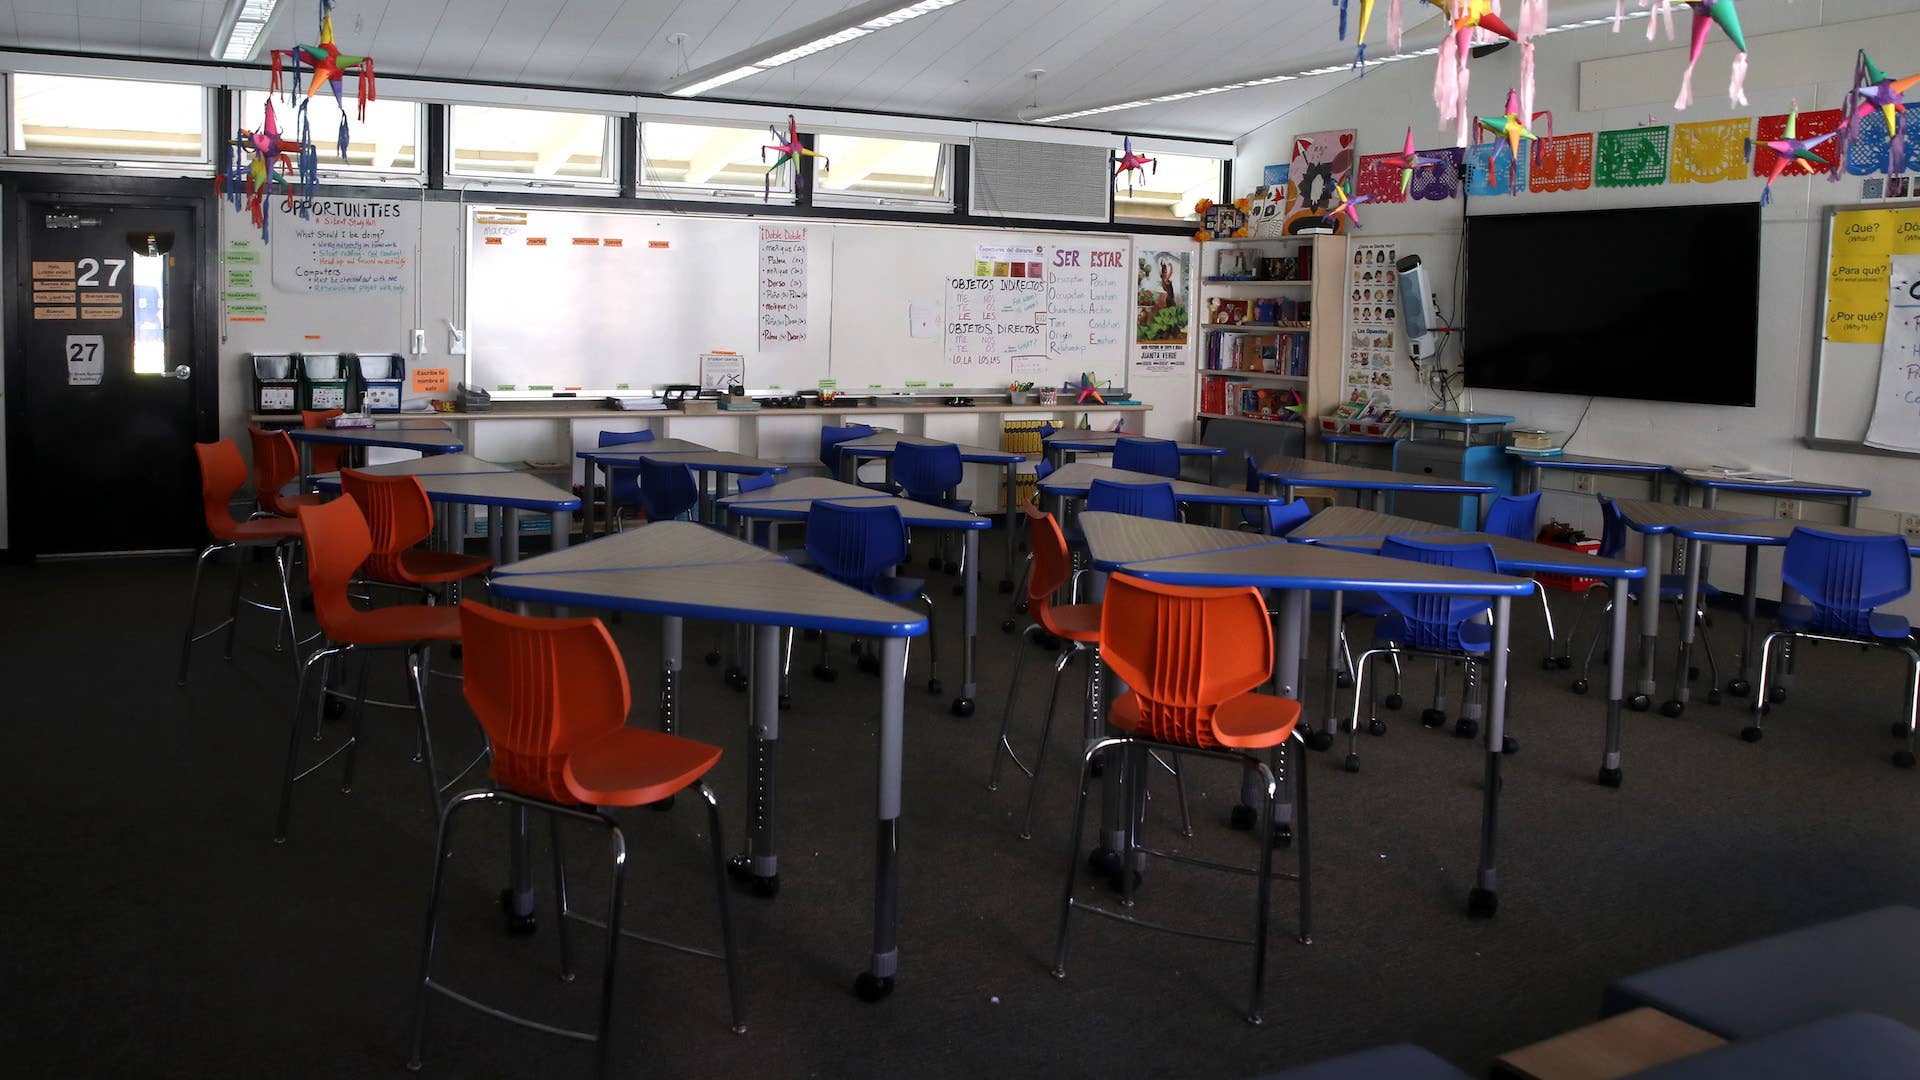 Photograph of inside school classroom